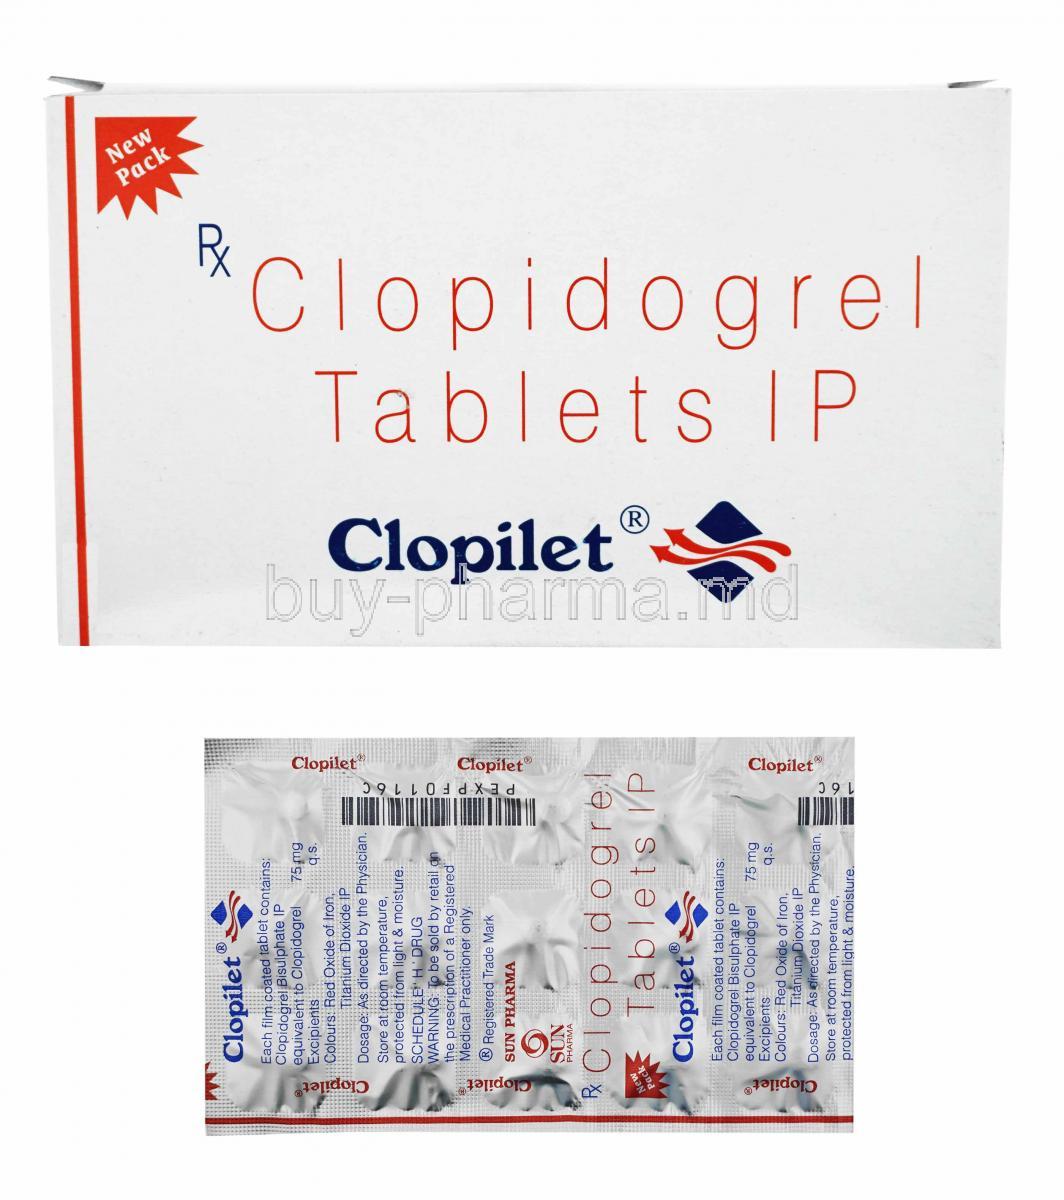 Clopilet, Clopidogrel 75mg box and tablets